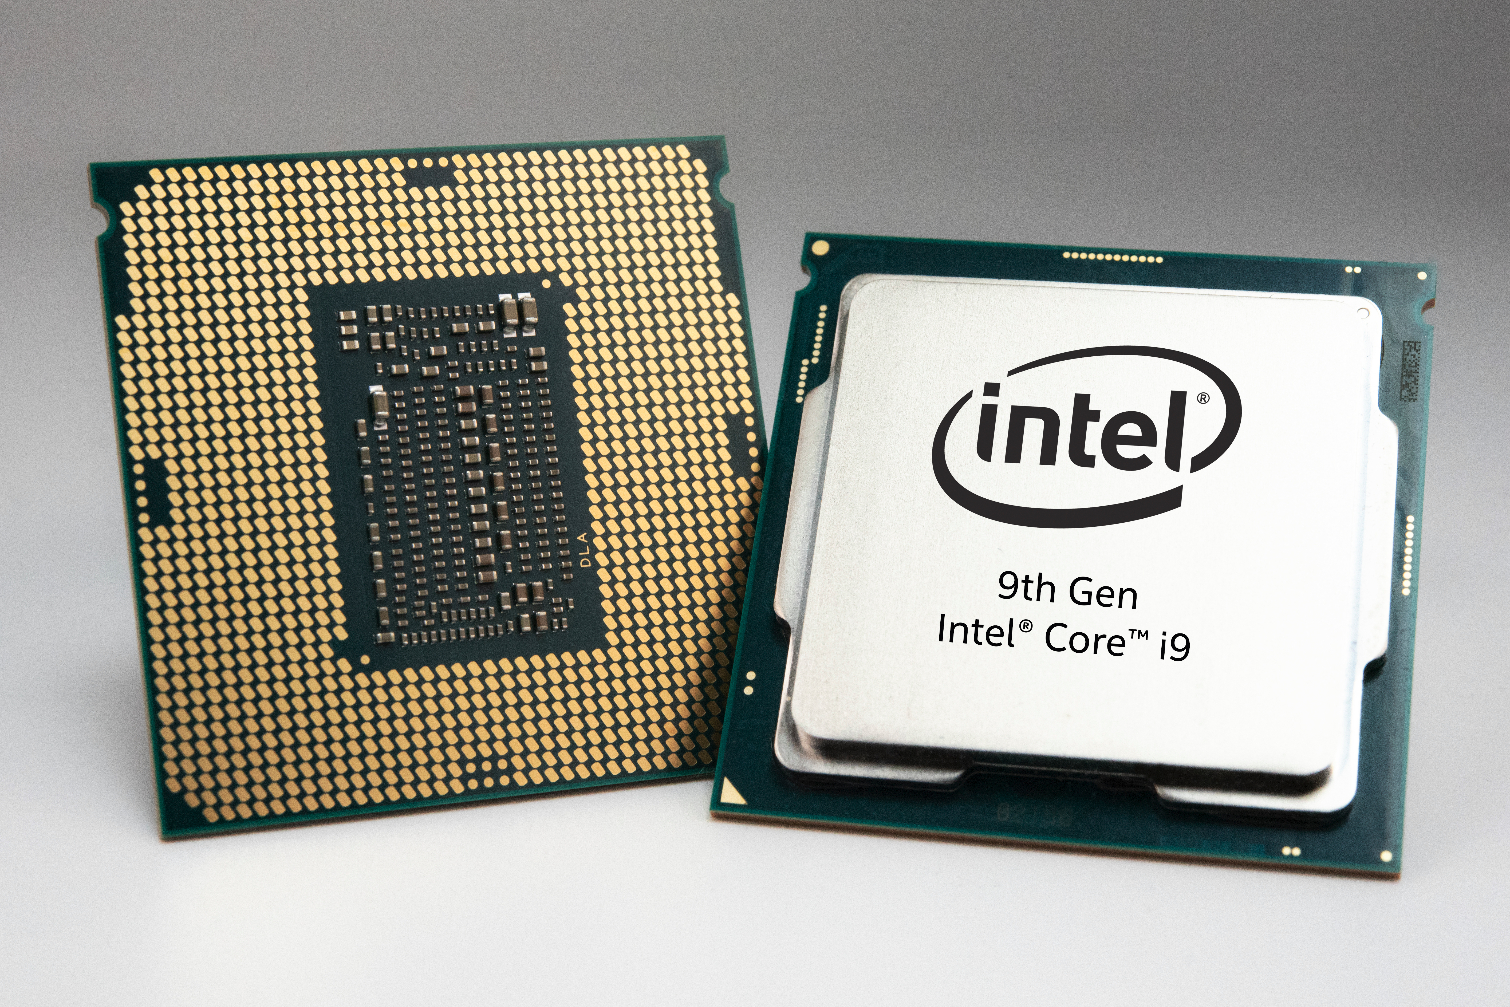 zege vorst Aardappelen Intel Core i7-9700K 9th Gen CPU Review: Eight Cores And No Hyper-Threading  - Tom's Hardware | Tom's Hardware